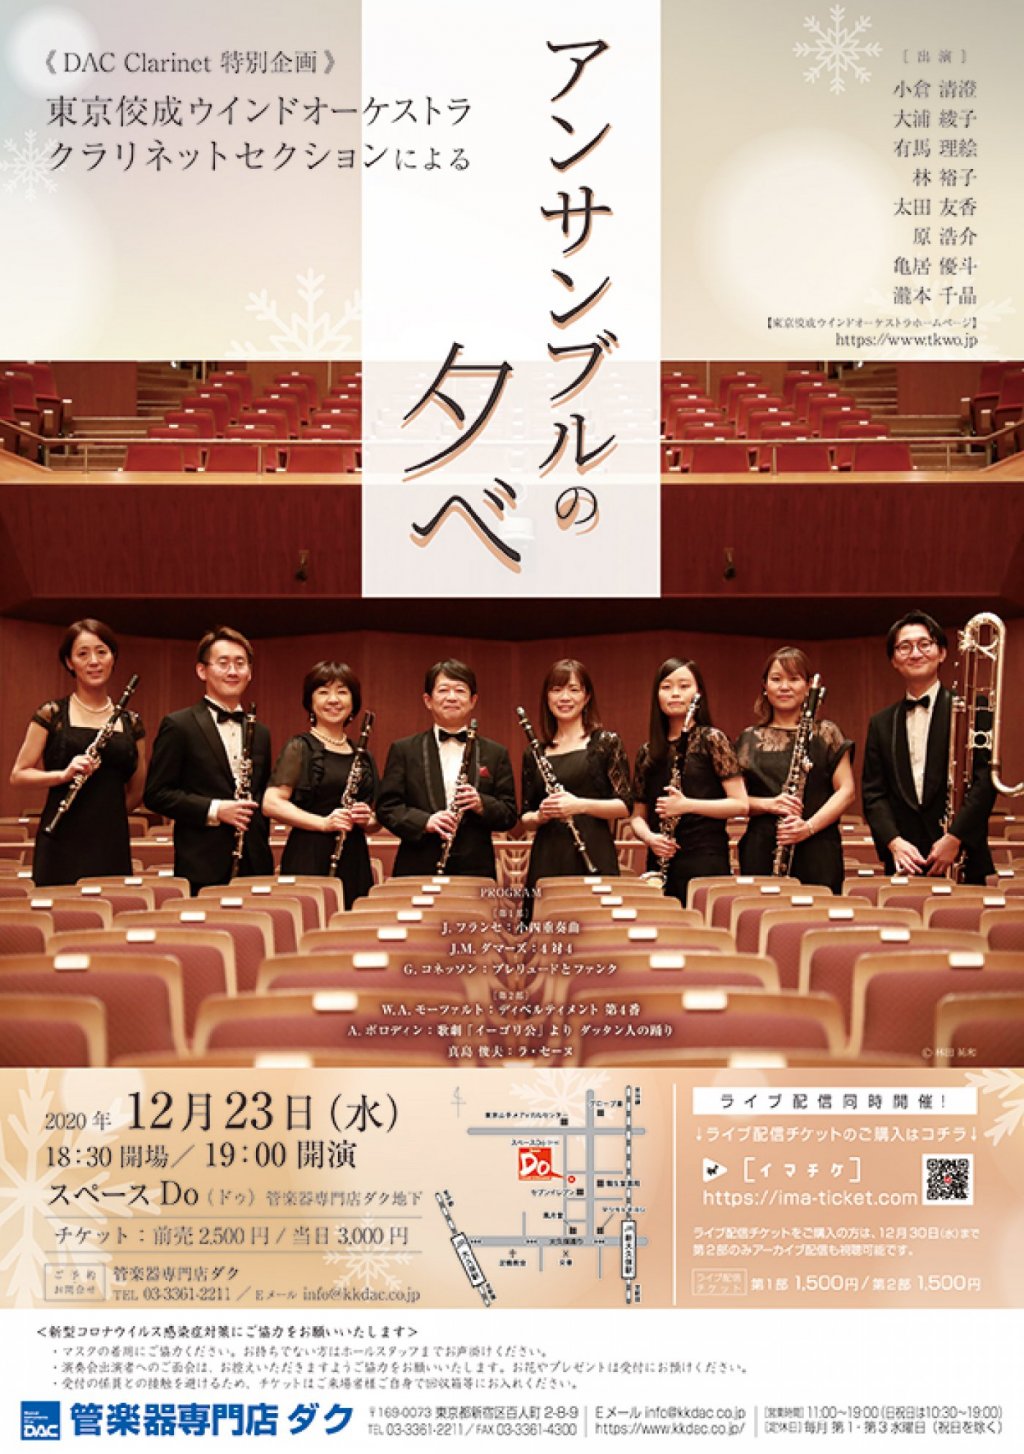 《DAC Clarinet 特別企画》 東京佼成ウインドオーケストラクラリネットセクションによる アンサンブルの夕べ